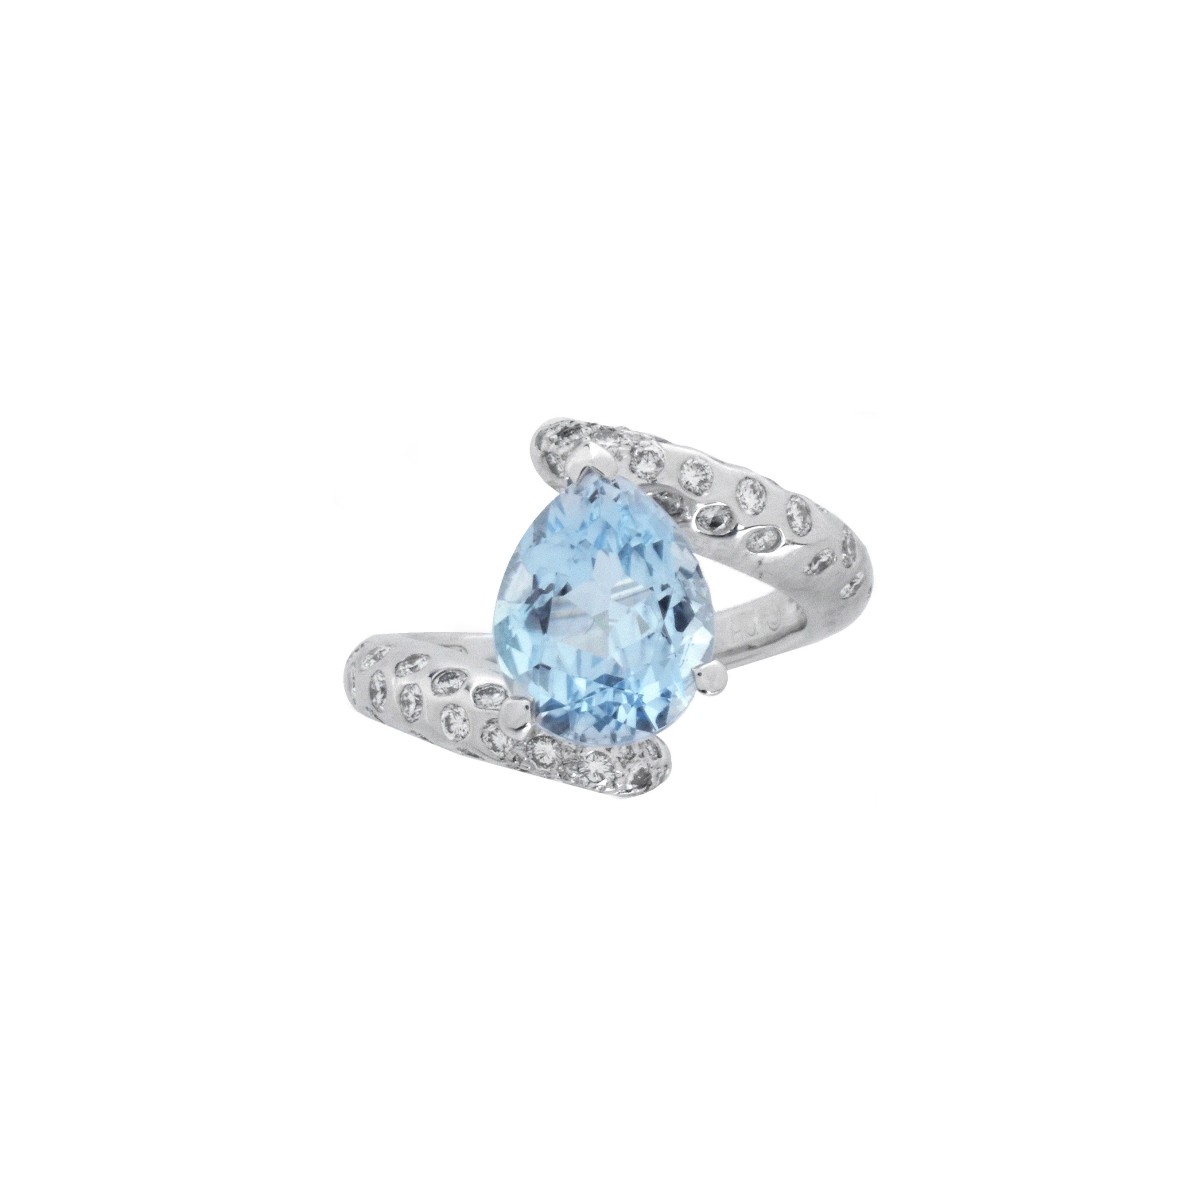 Chanel Aquamarine, Diamond and 18K Ring